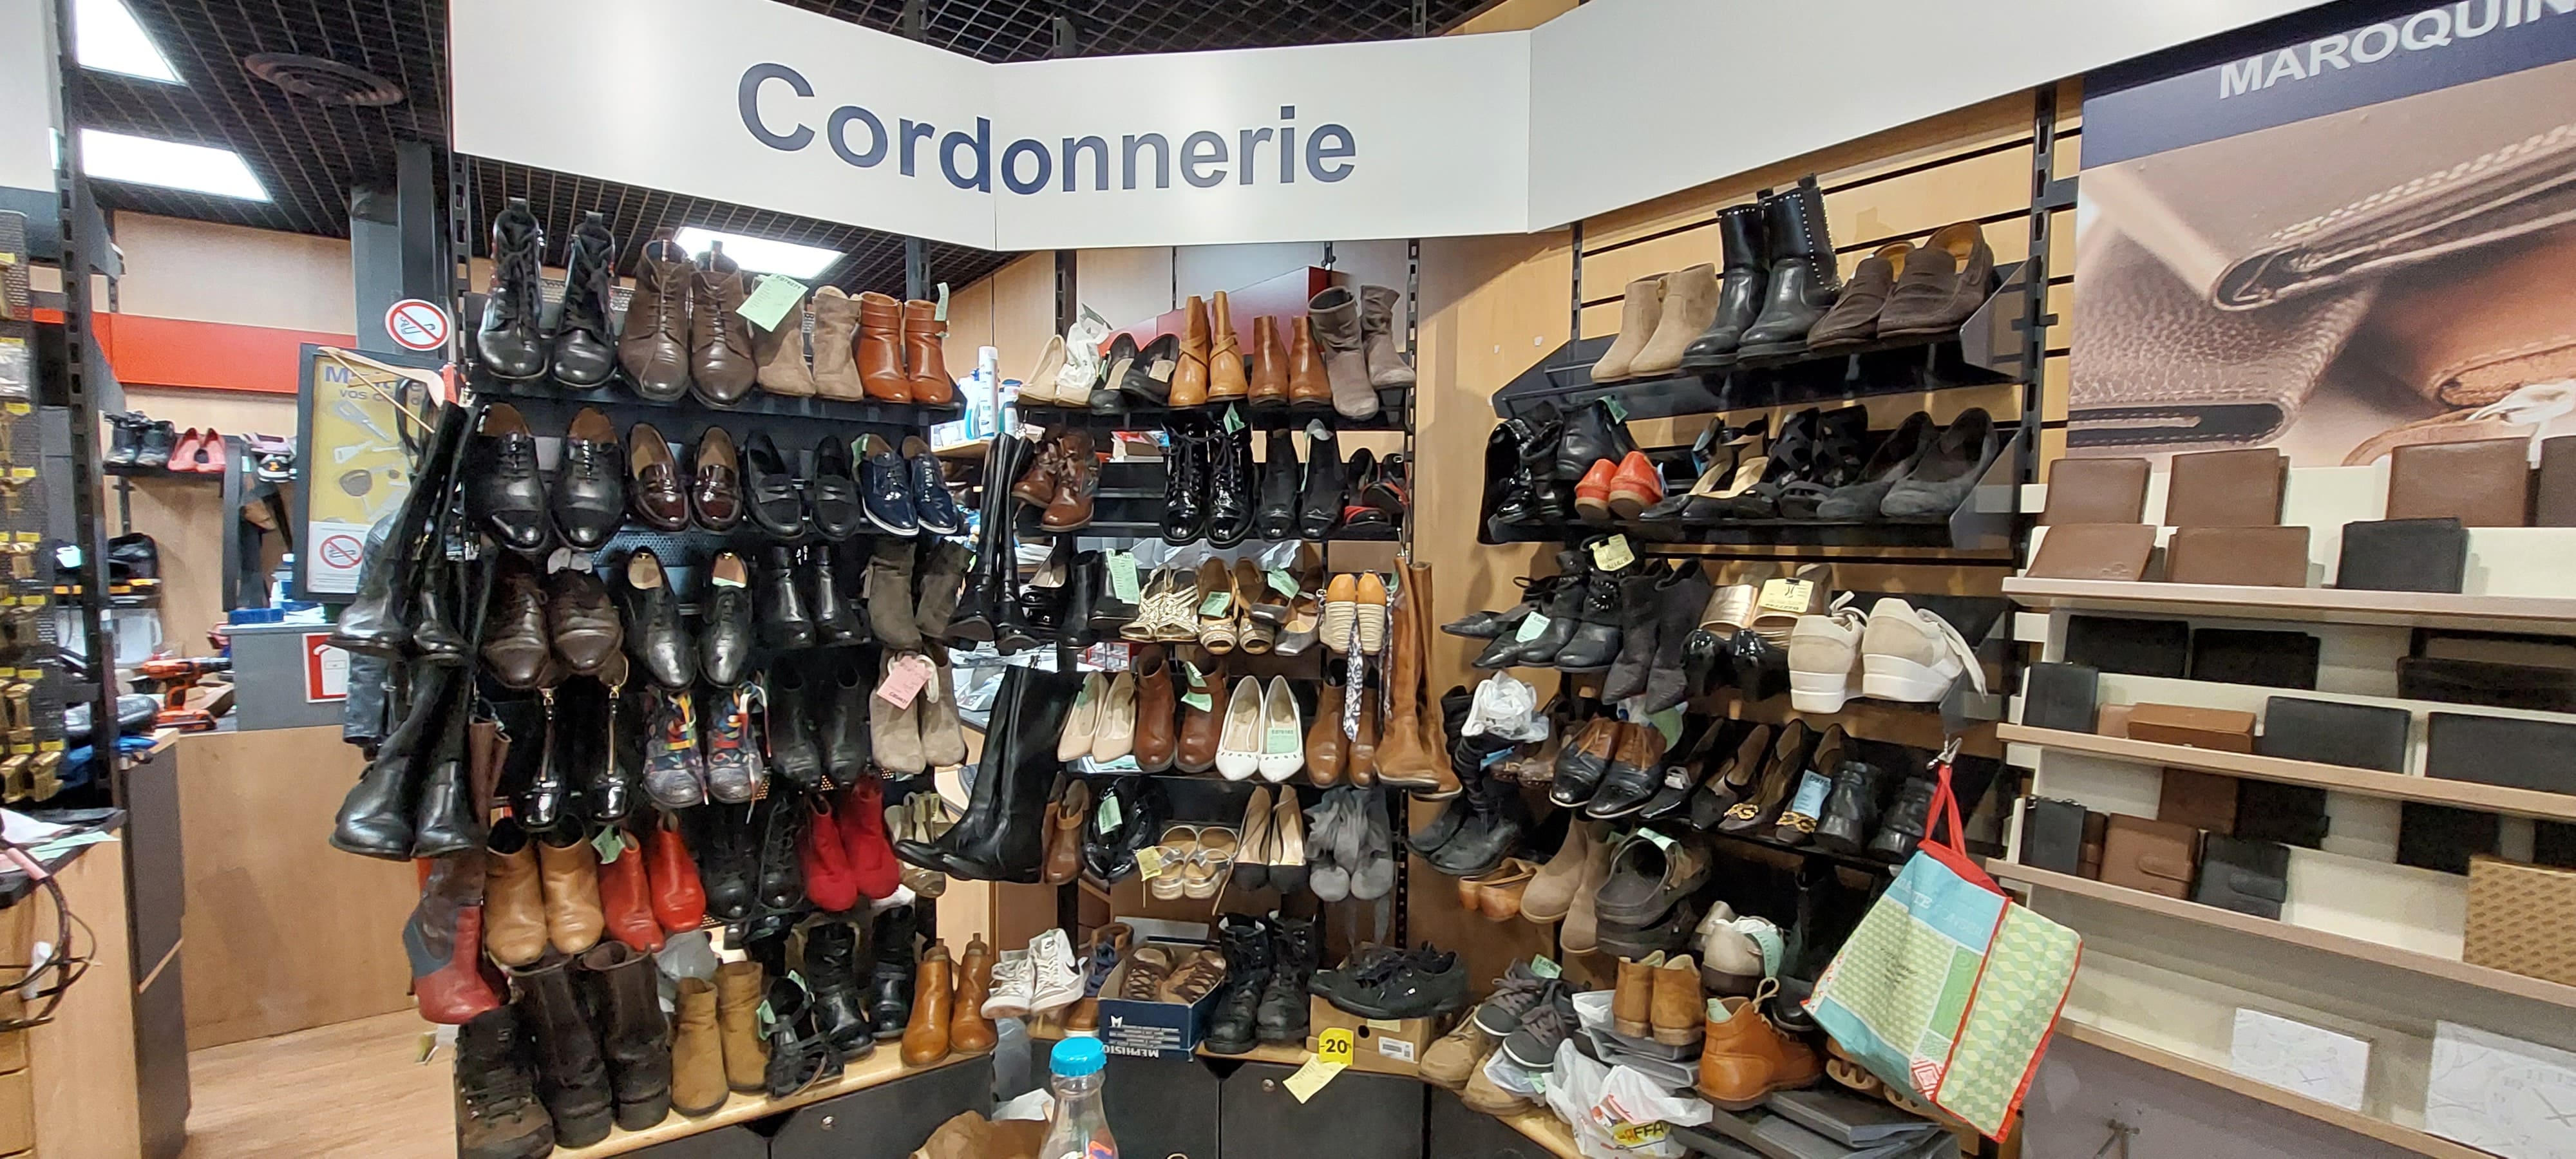 Mister Minit boutique reparation chaussures abimees Dole